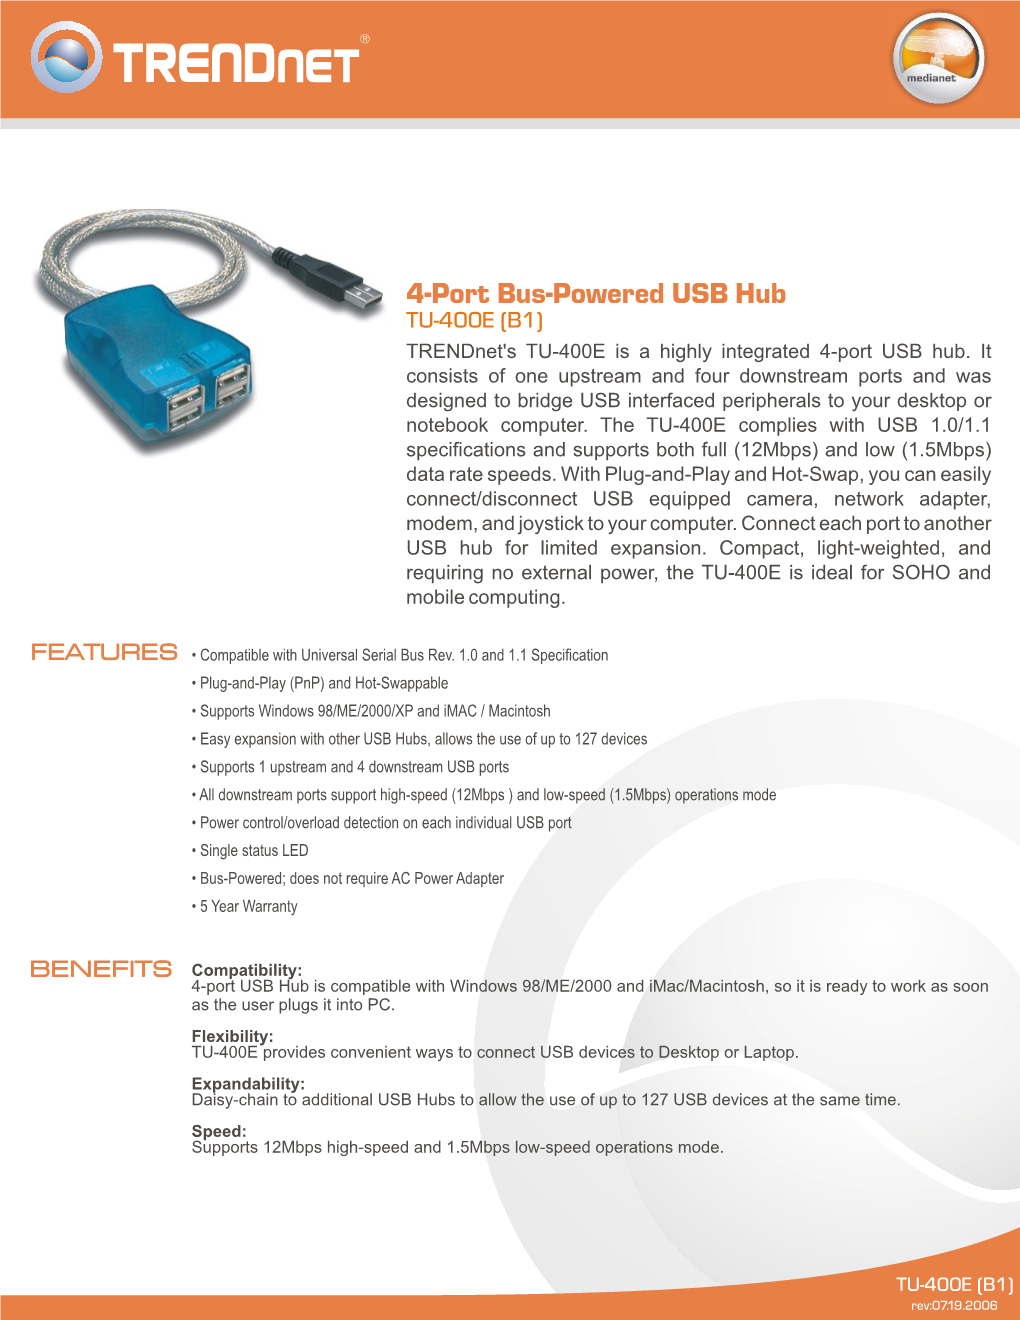 4-Port Bus-Powered USB Hub TU-400E (B1) Trendnet's TU-400E Is a Highly Integrated 4-Port USB Hub